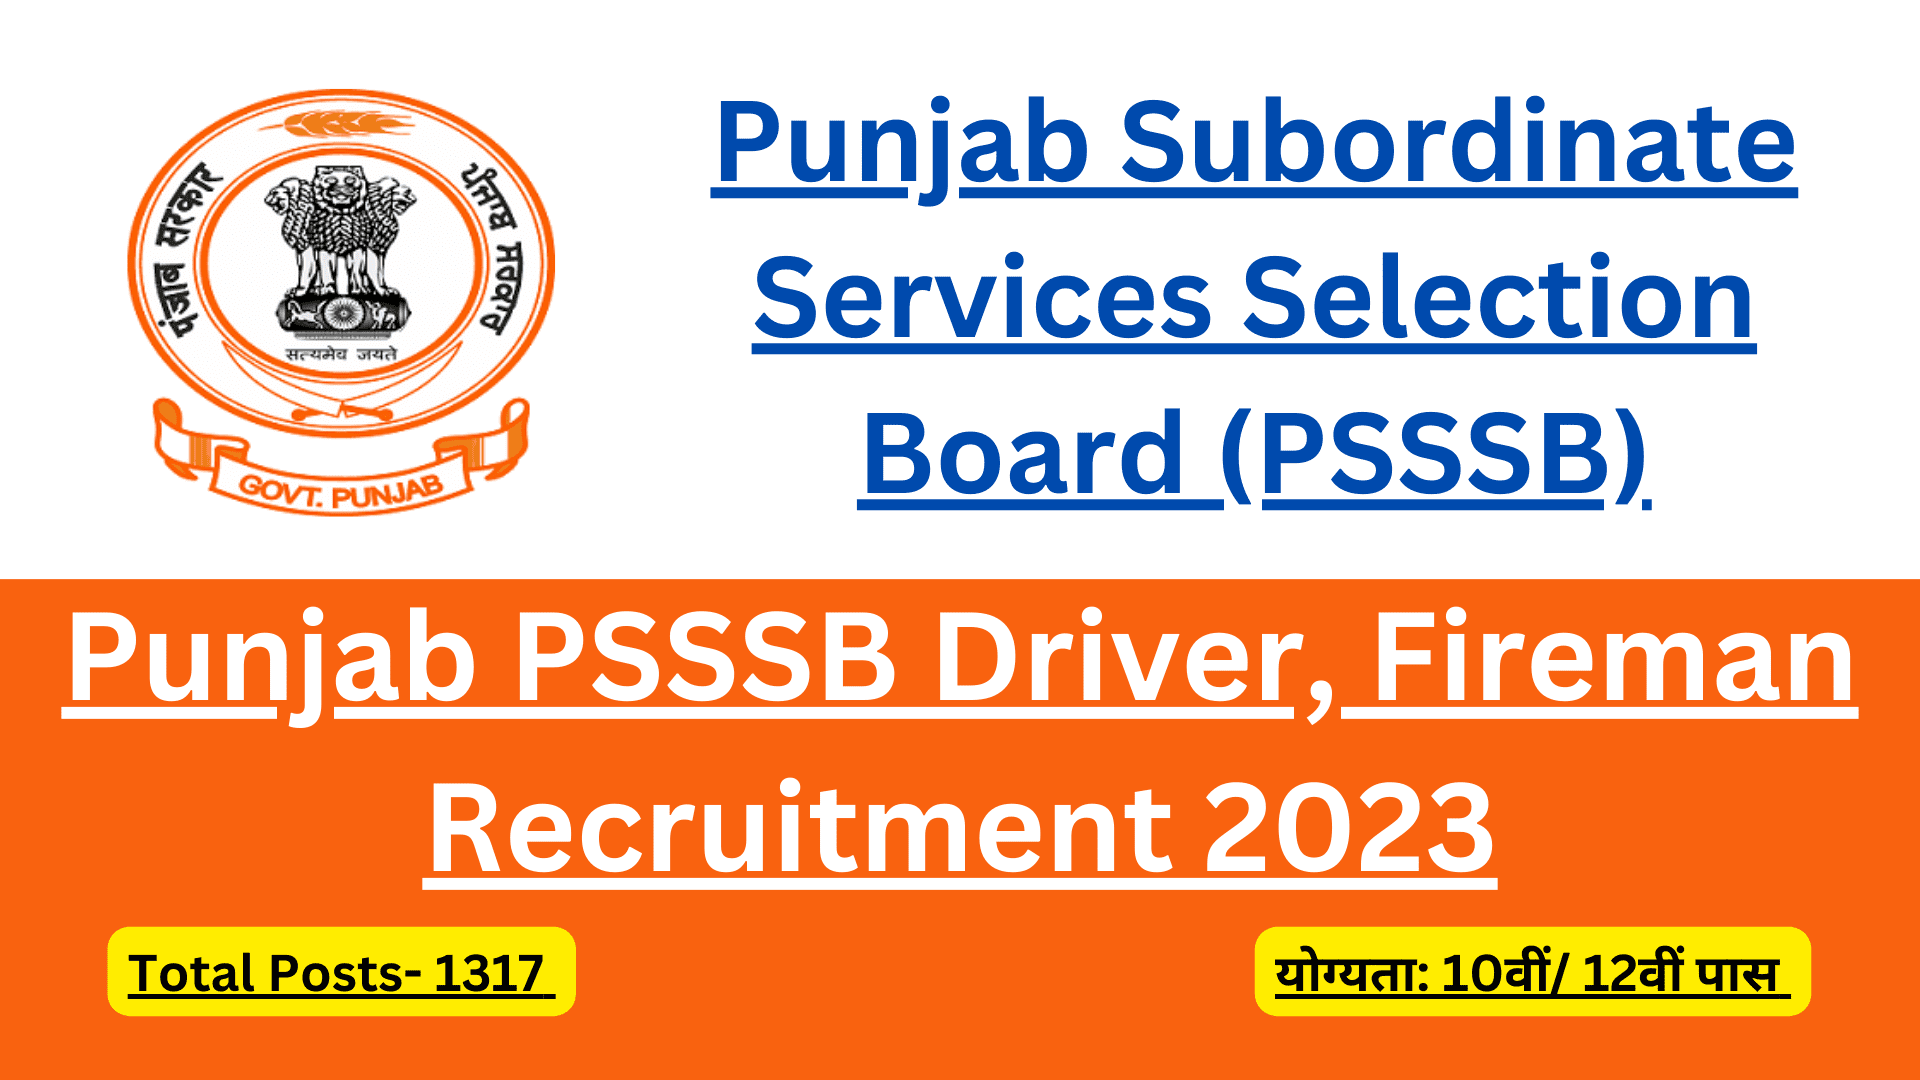 Punjab PSSSB Driver, Fireman Recruitment 2023